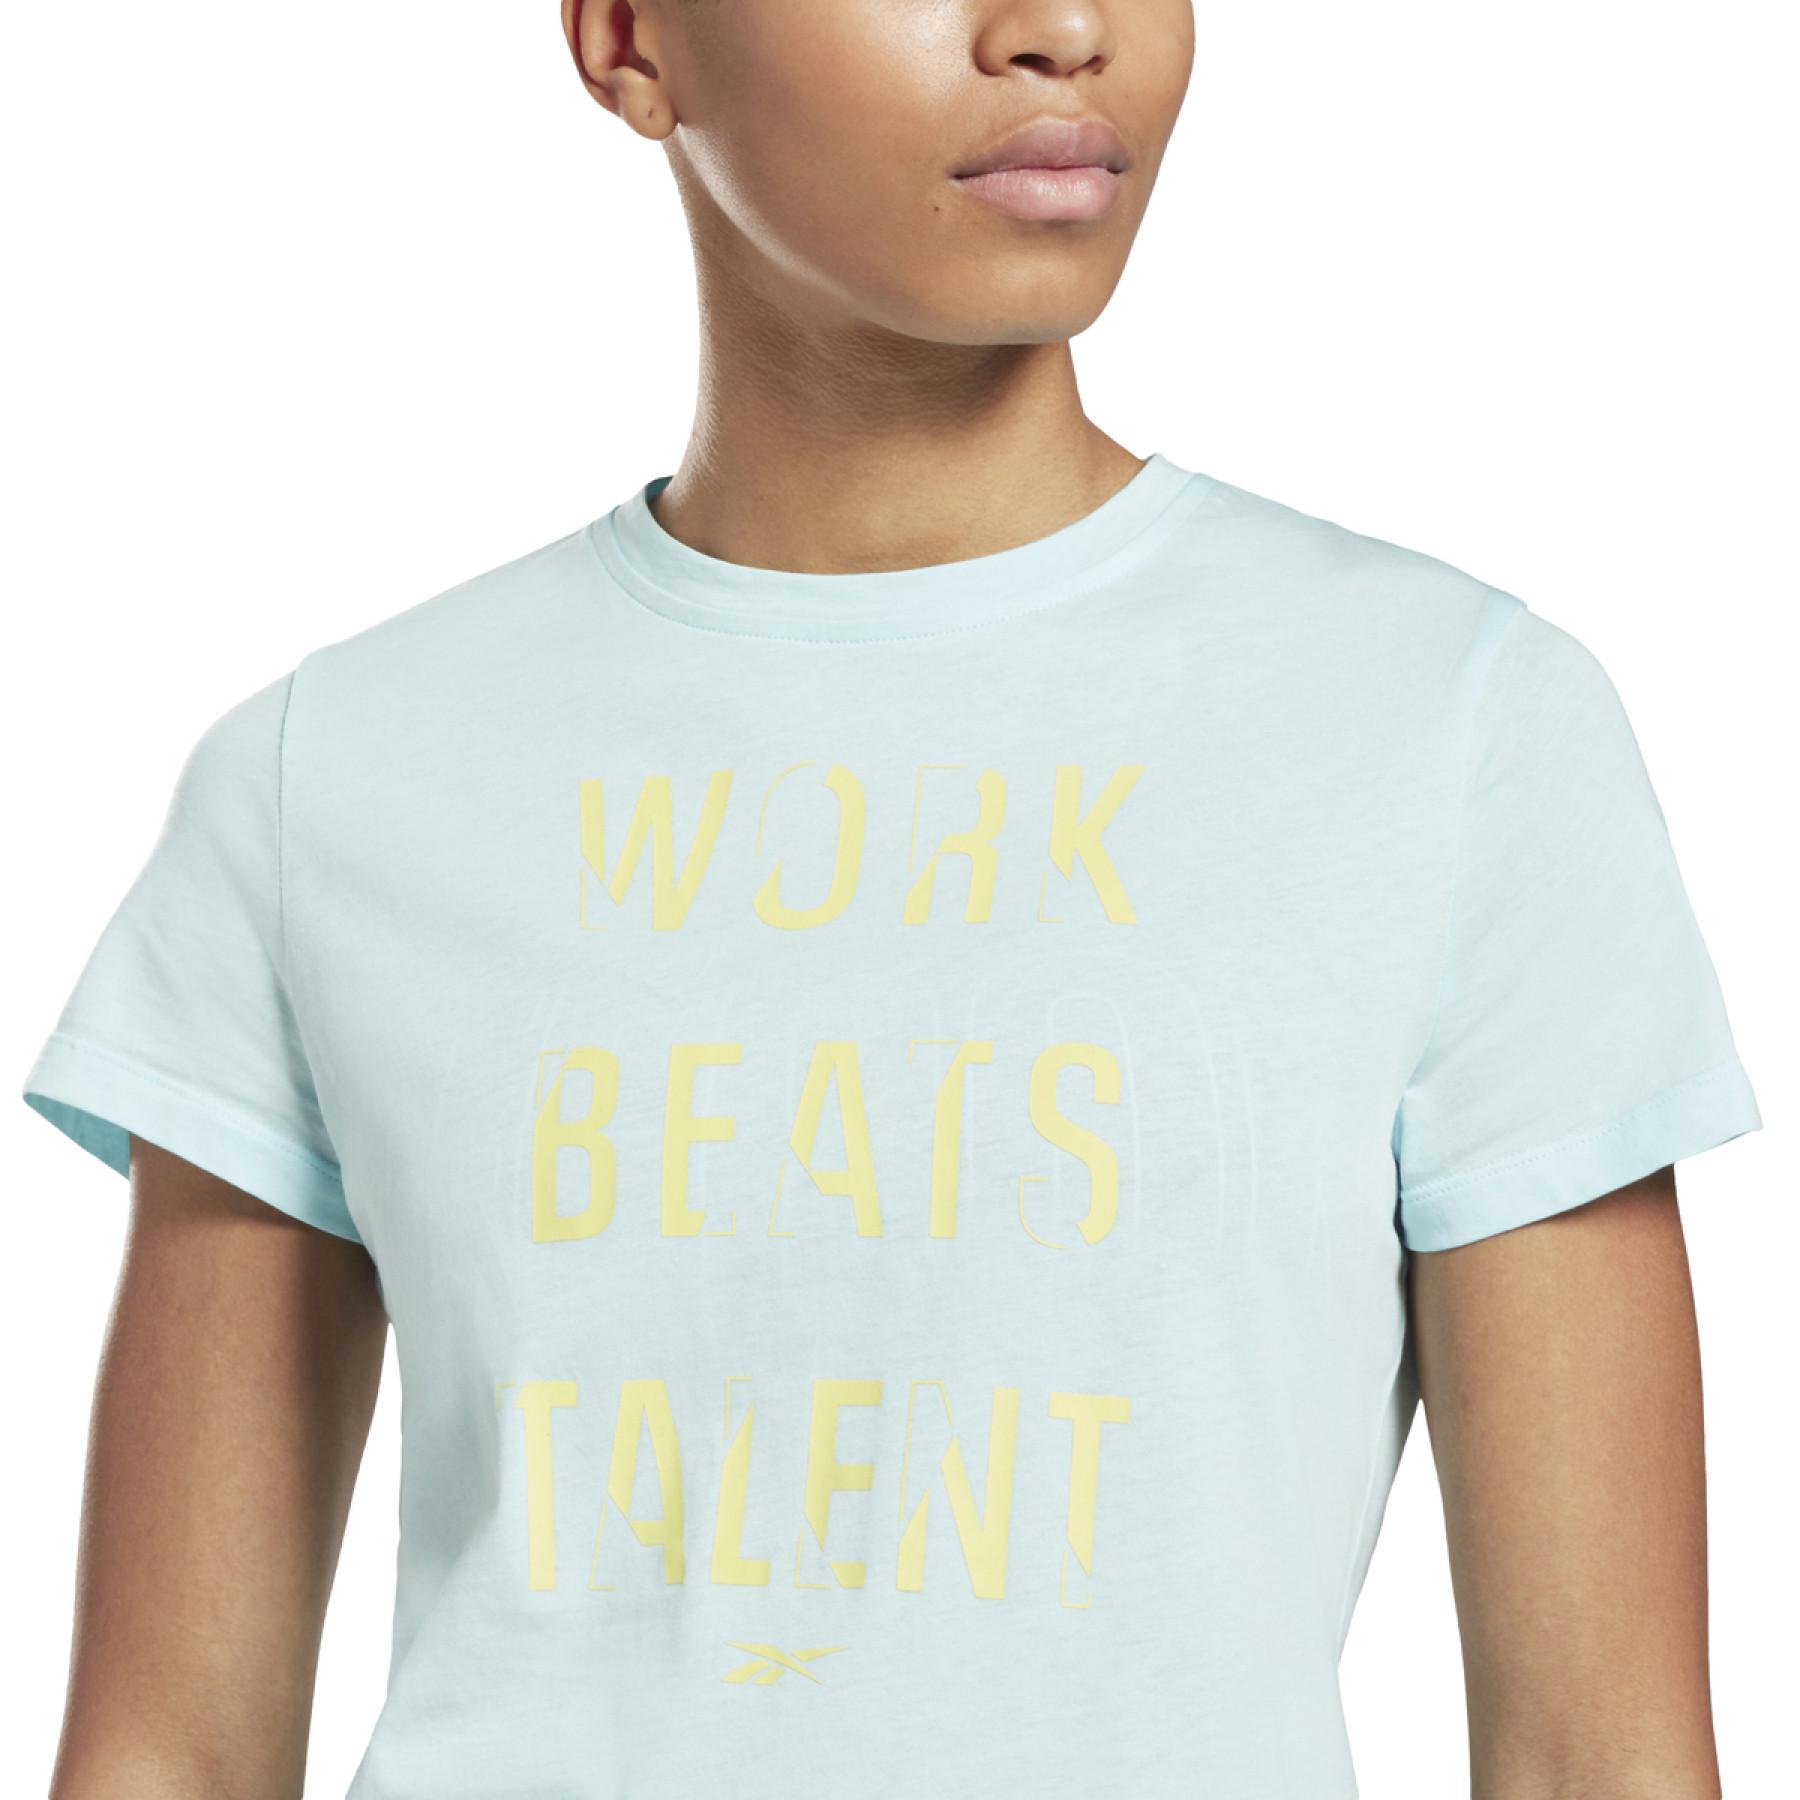 Maglietta da donna Reebok Work Beats Talent Graphic